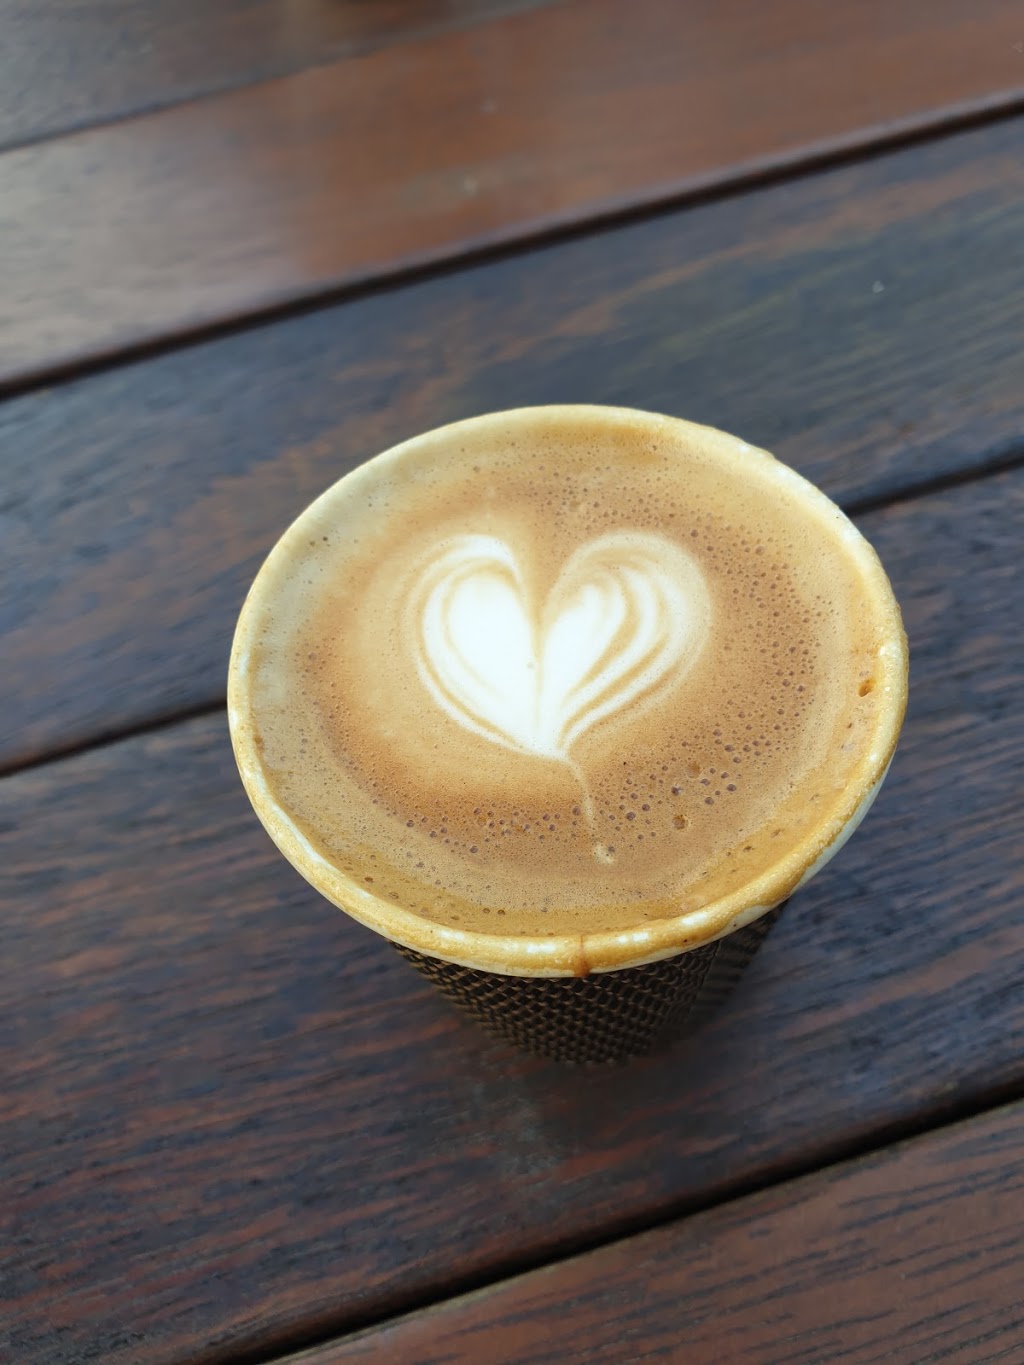 Red Parrot Coffee / Parrot Espresso Bar | 23 Hubbard St, Islington NSW 2296, Australia | Phone: (02) 4062 9029